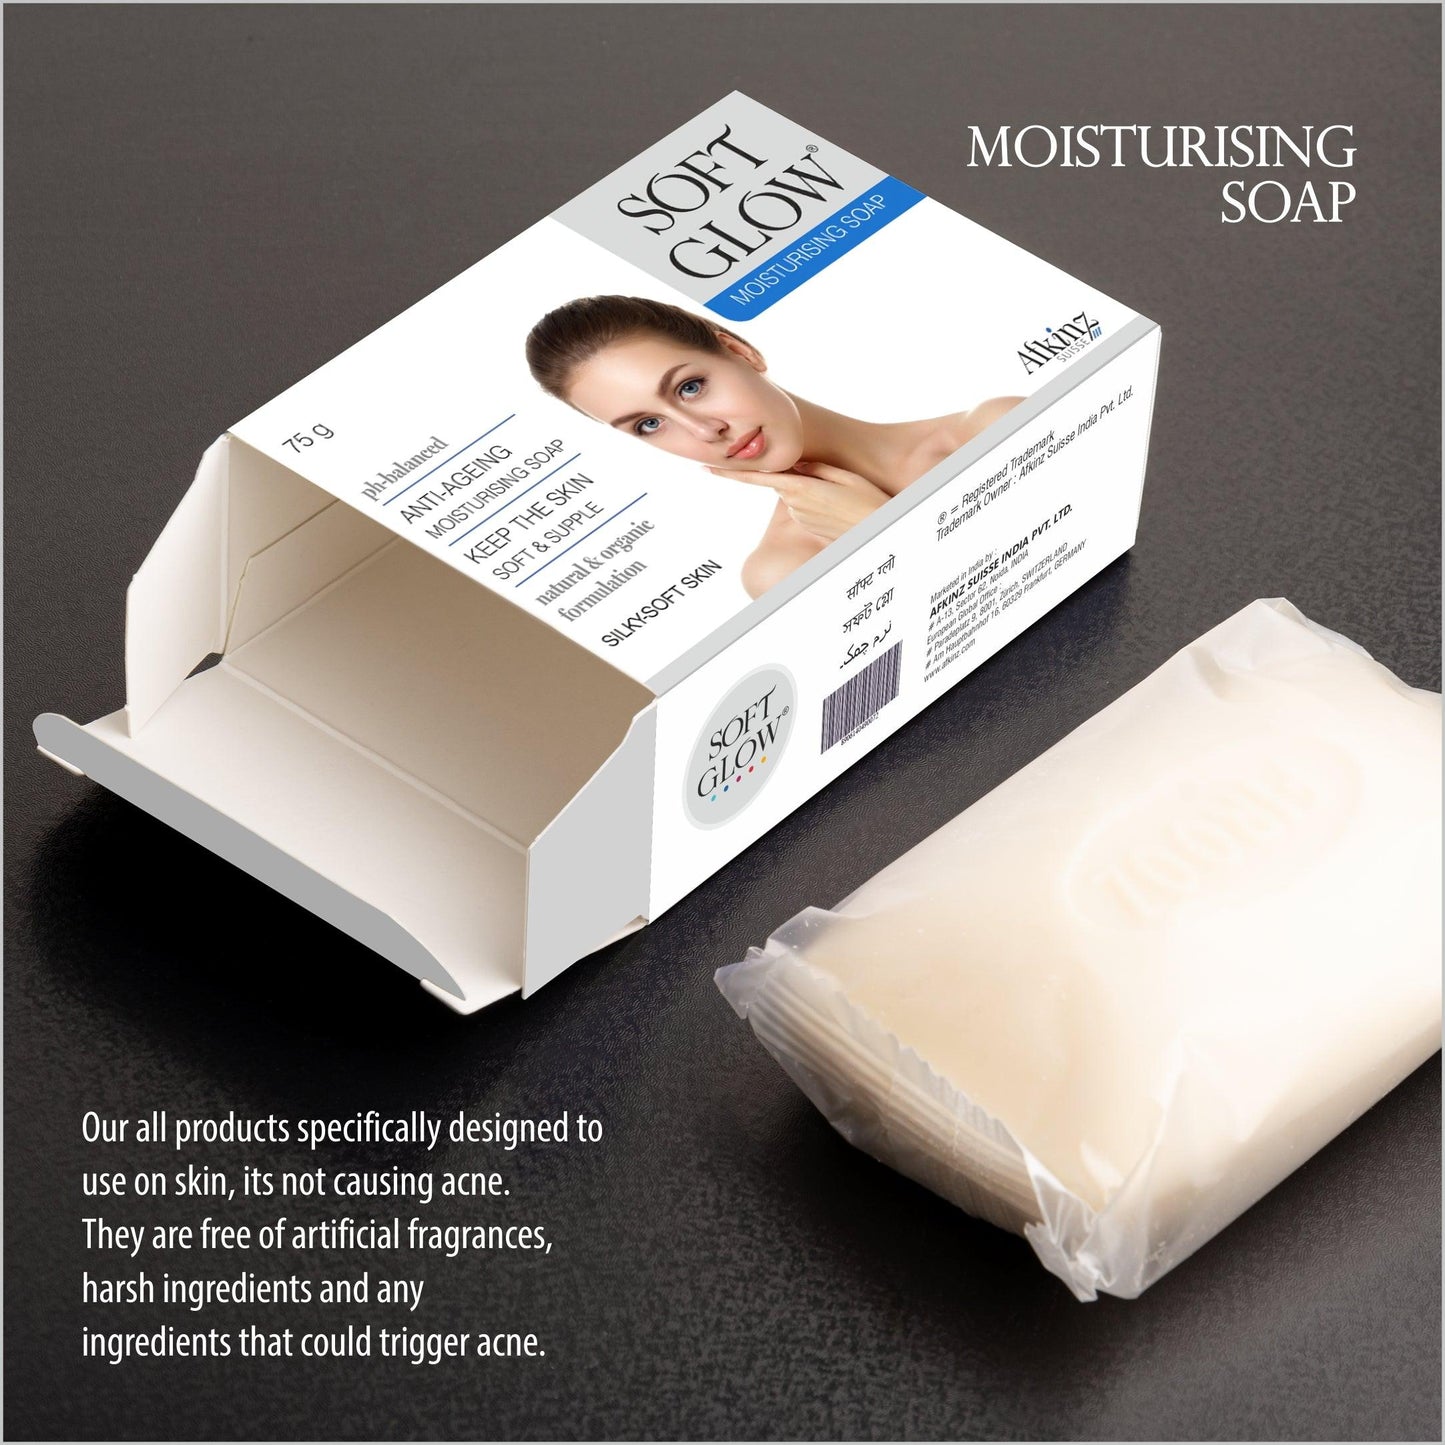 Soft Glow 2 Cream & 2 Soap Combo Pack For Acne , Dark Circle , Pimple - Olefia Biopharma Limited